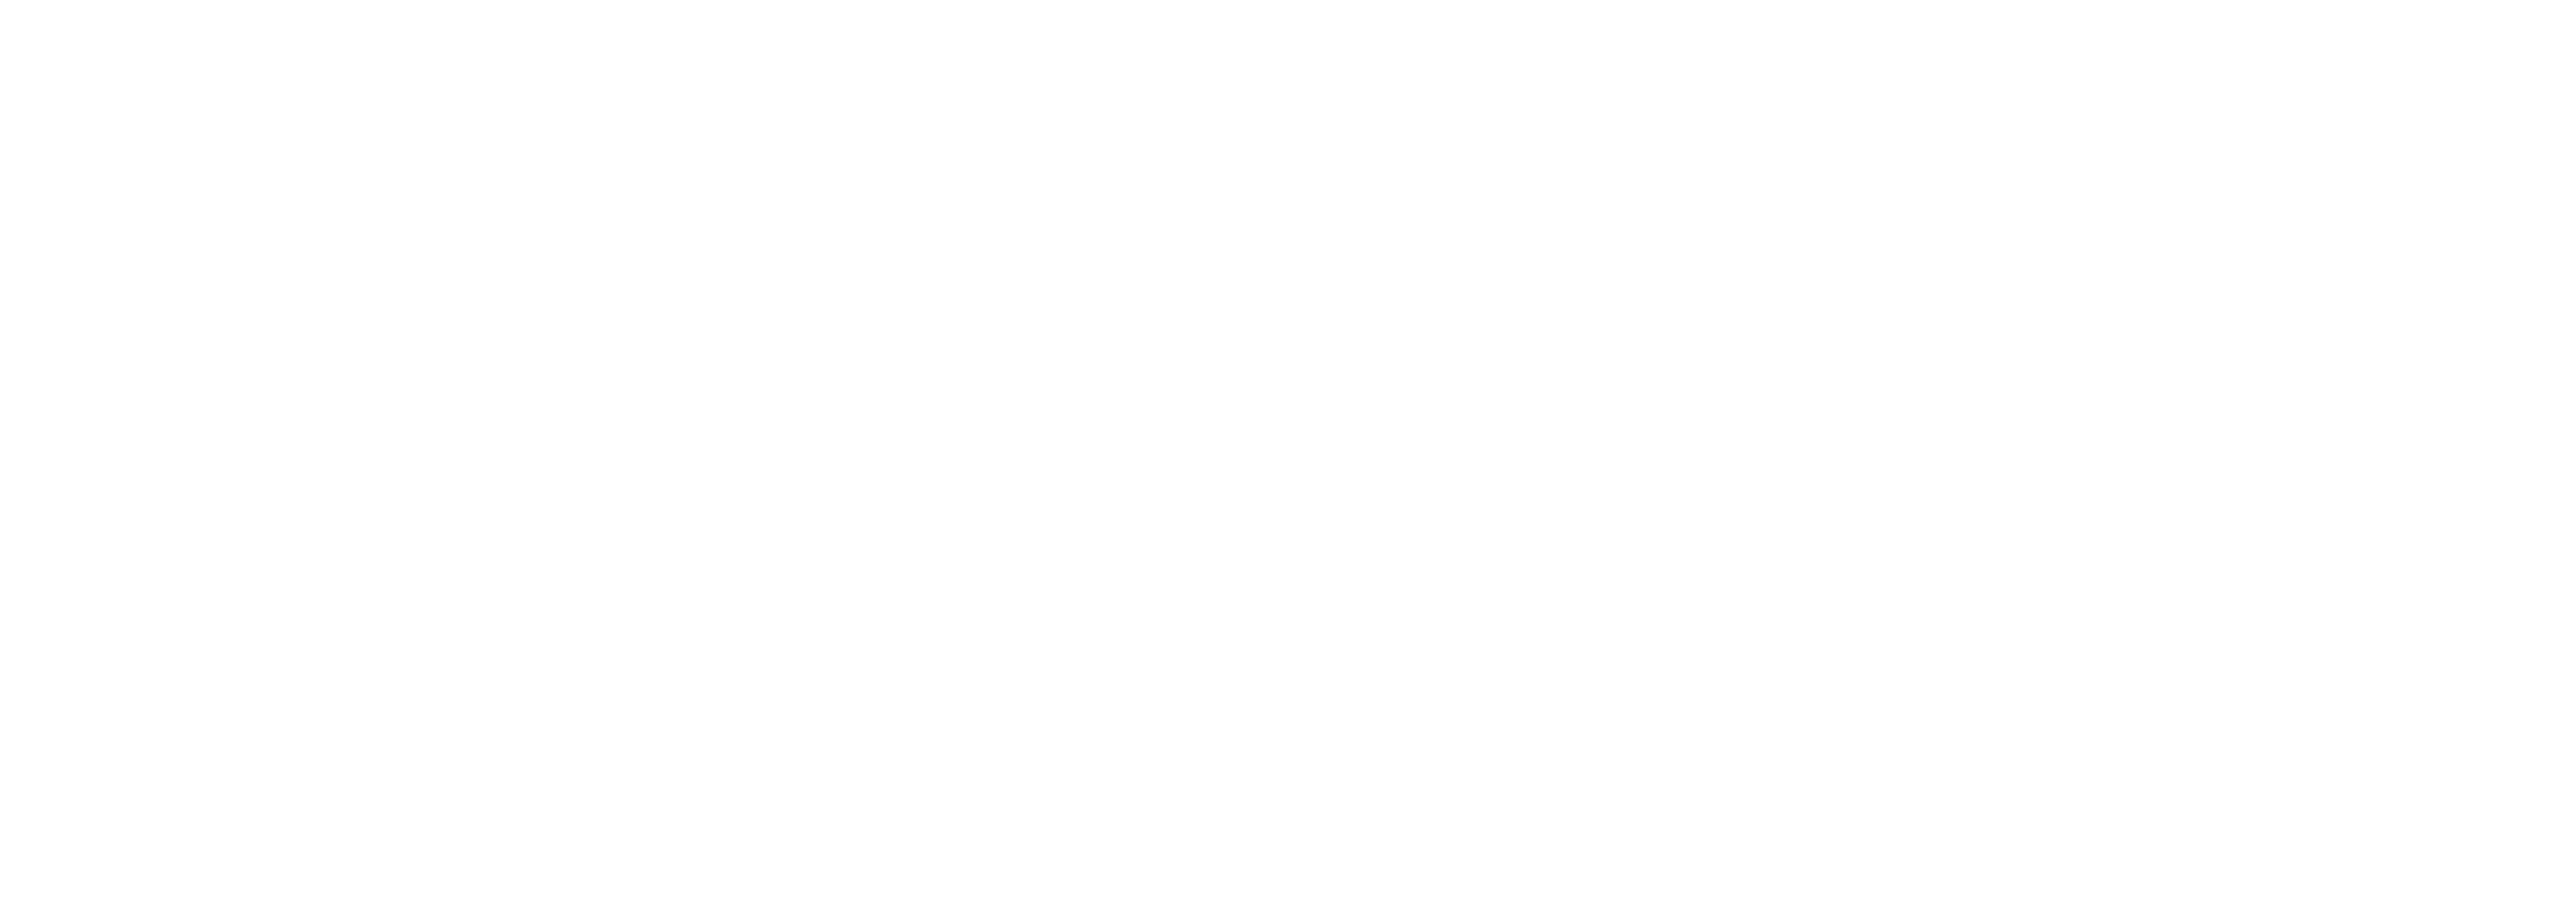 upride_logo